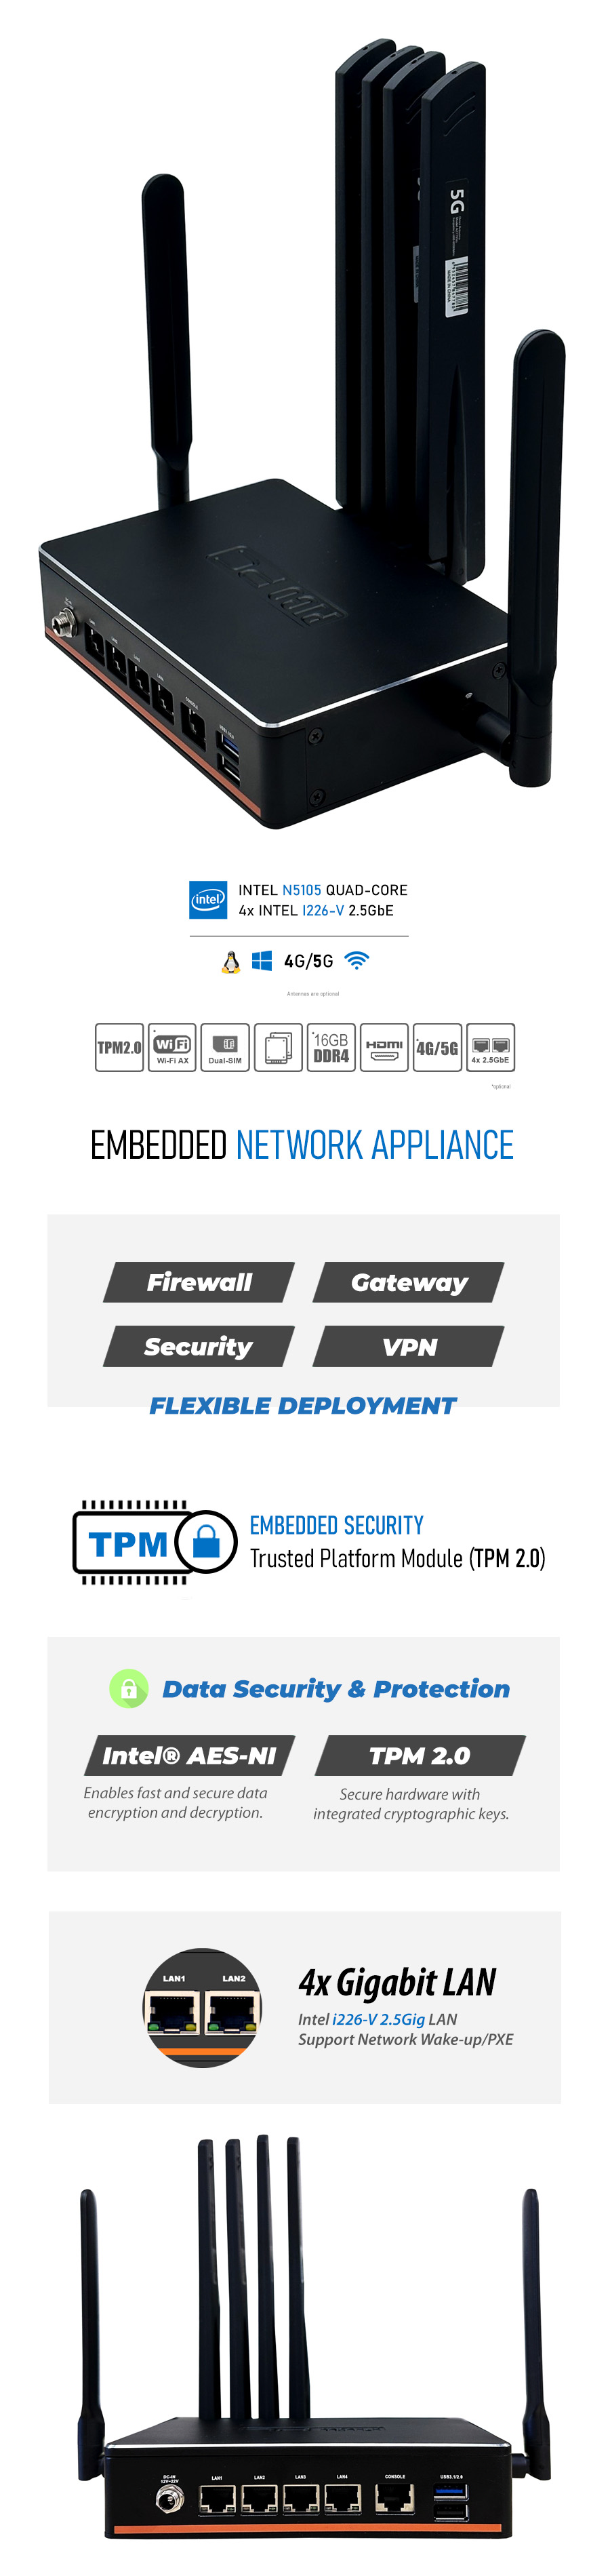 Intel N5105 4 LAN 2.5GbE 5G CPE Fanless Network Appliance SD-WAN Security Gateway with TPM - MNHO-095 | Image